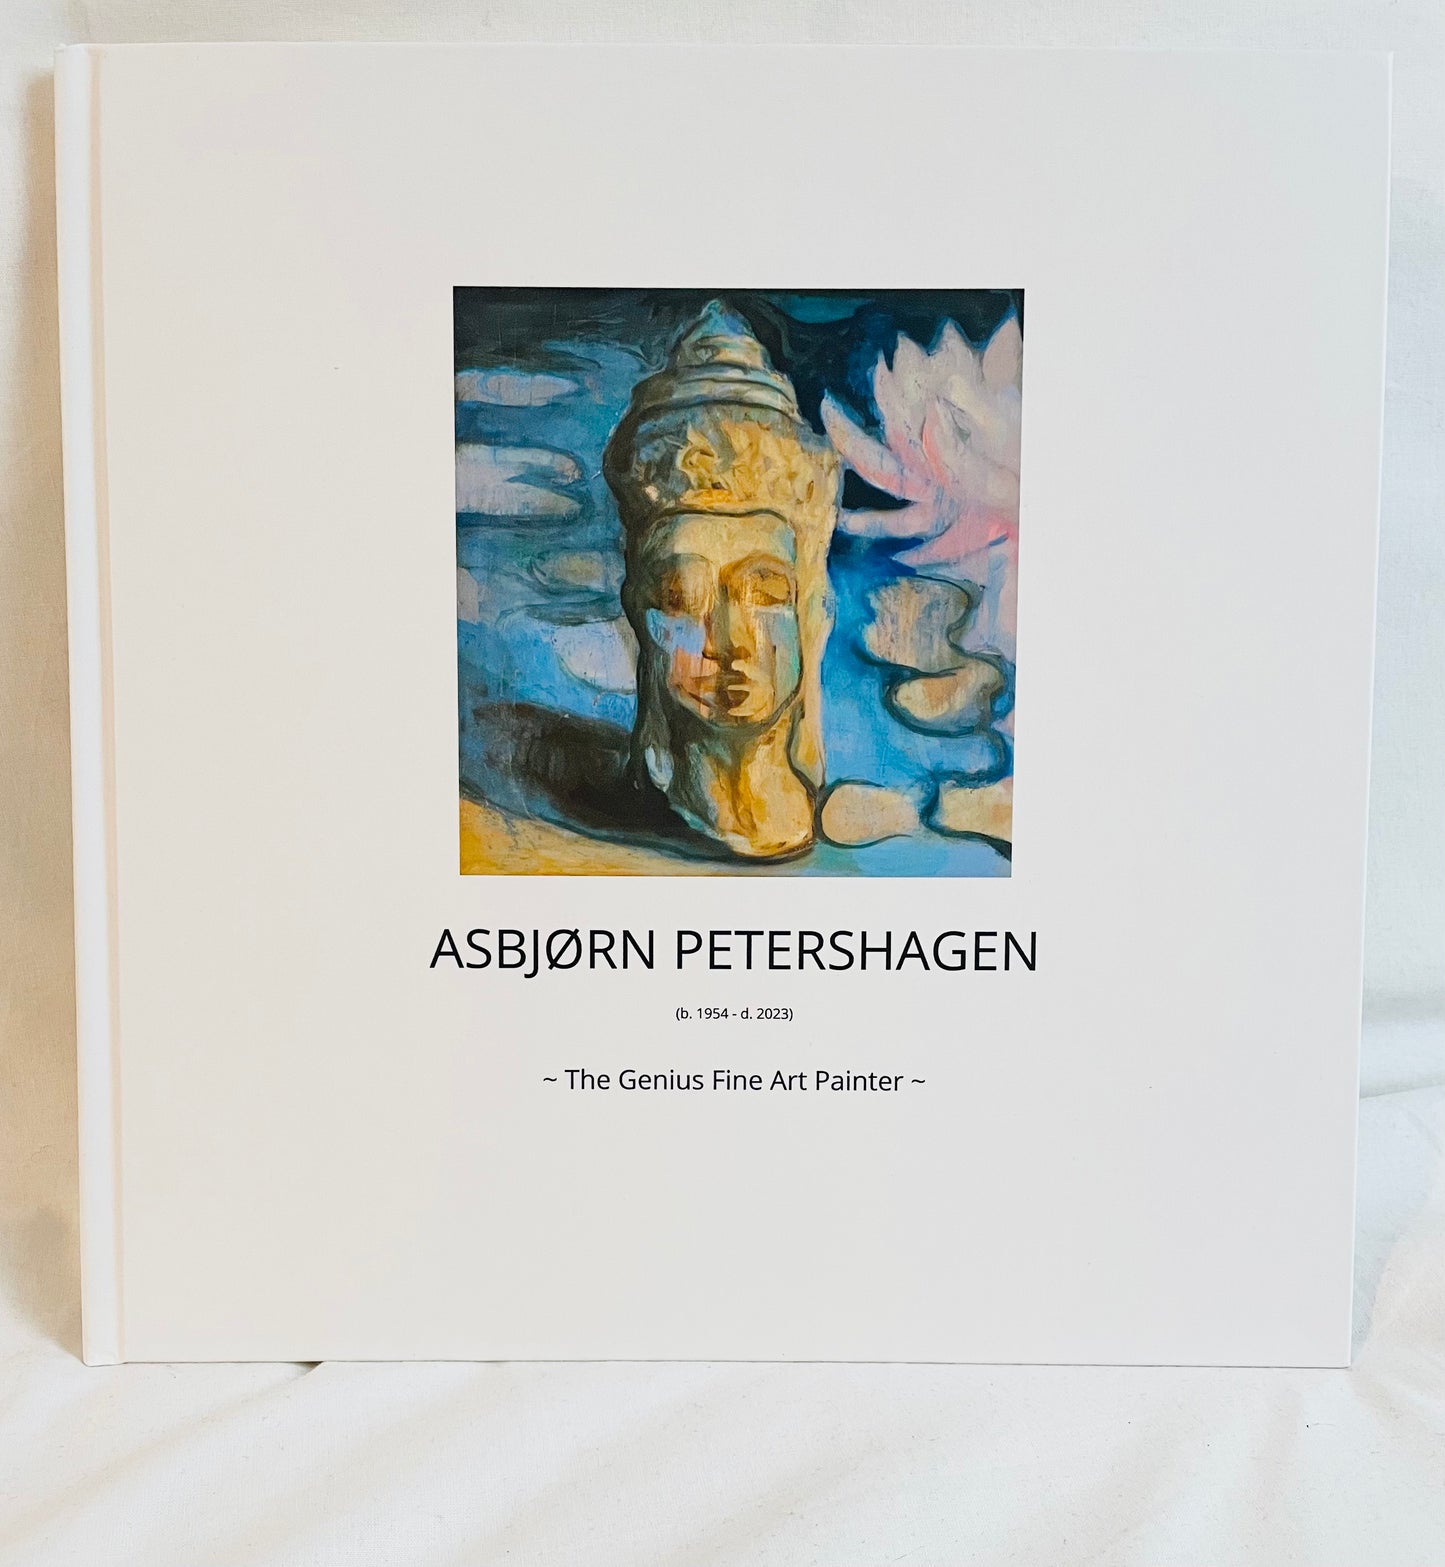 Asbjørn Petershagen - The Genius Fine Art painter - Hardcover Photo Book